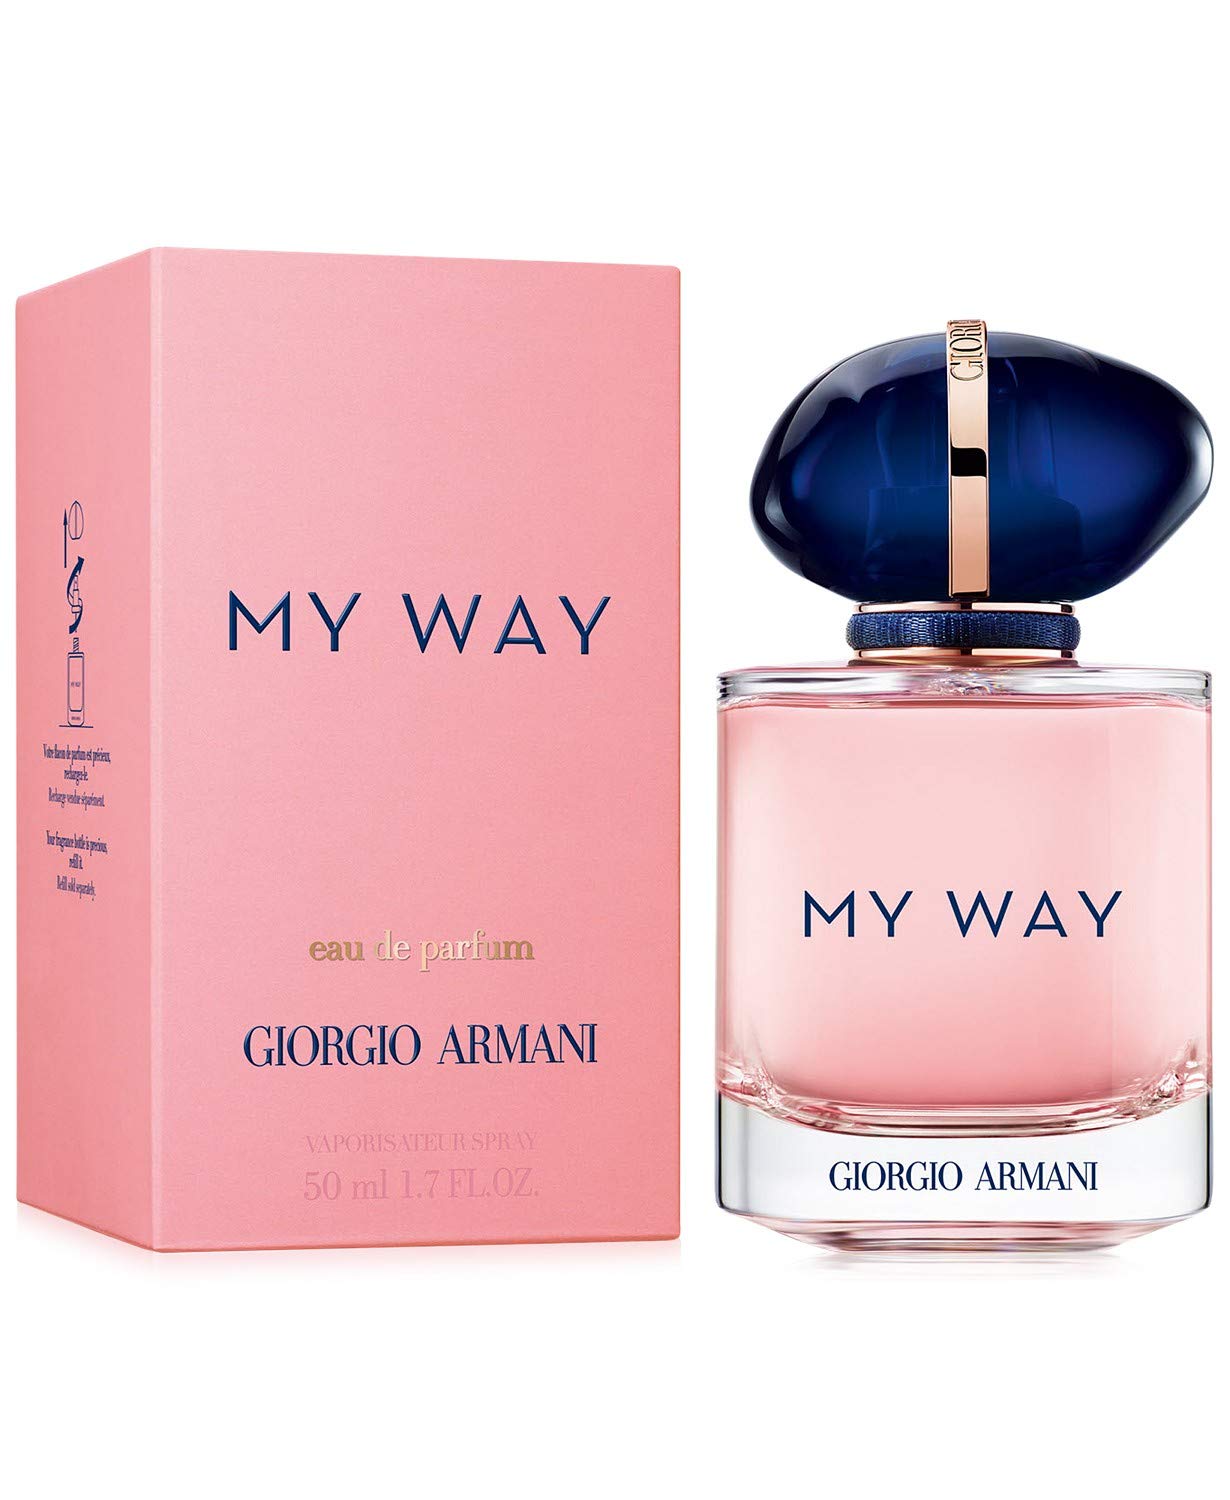 Giorgio Armani My Way for Women Eau de Parfum Spray, 1.7 Ounce